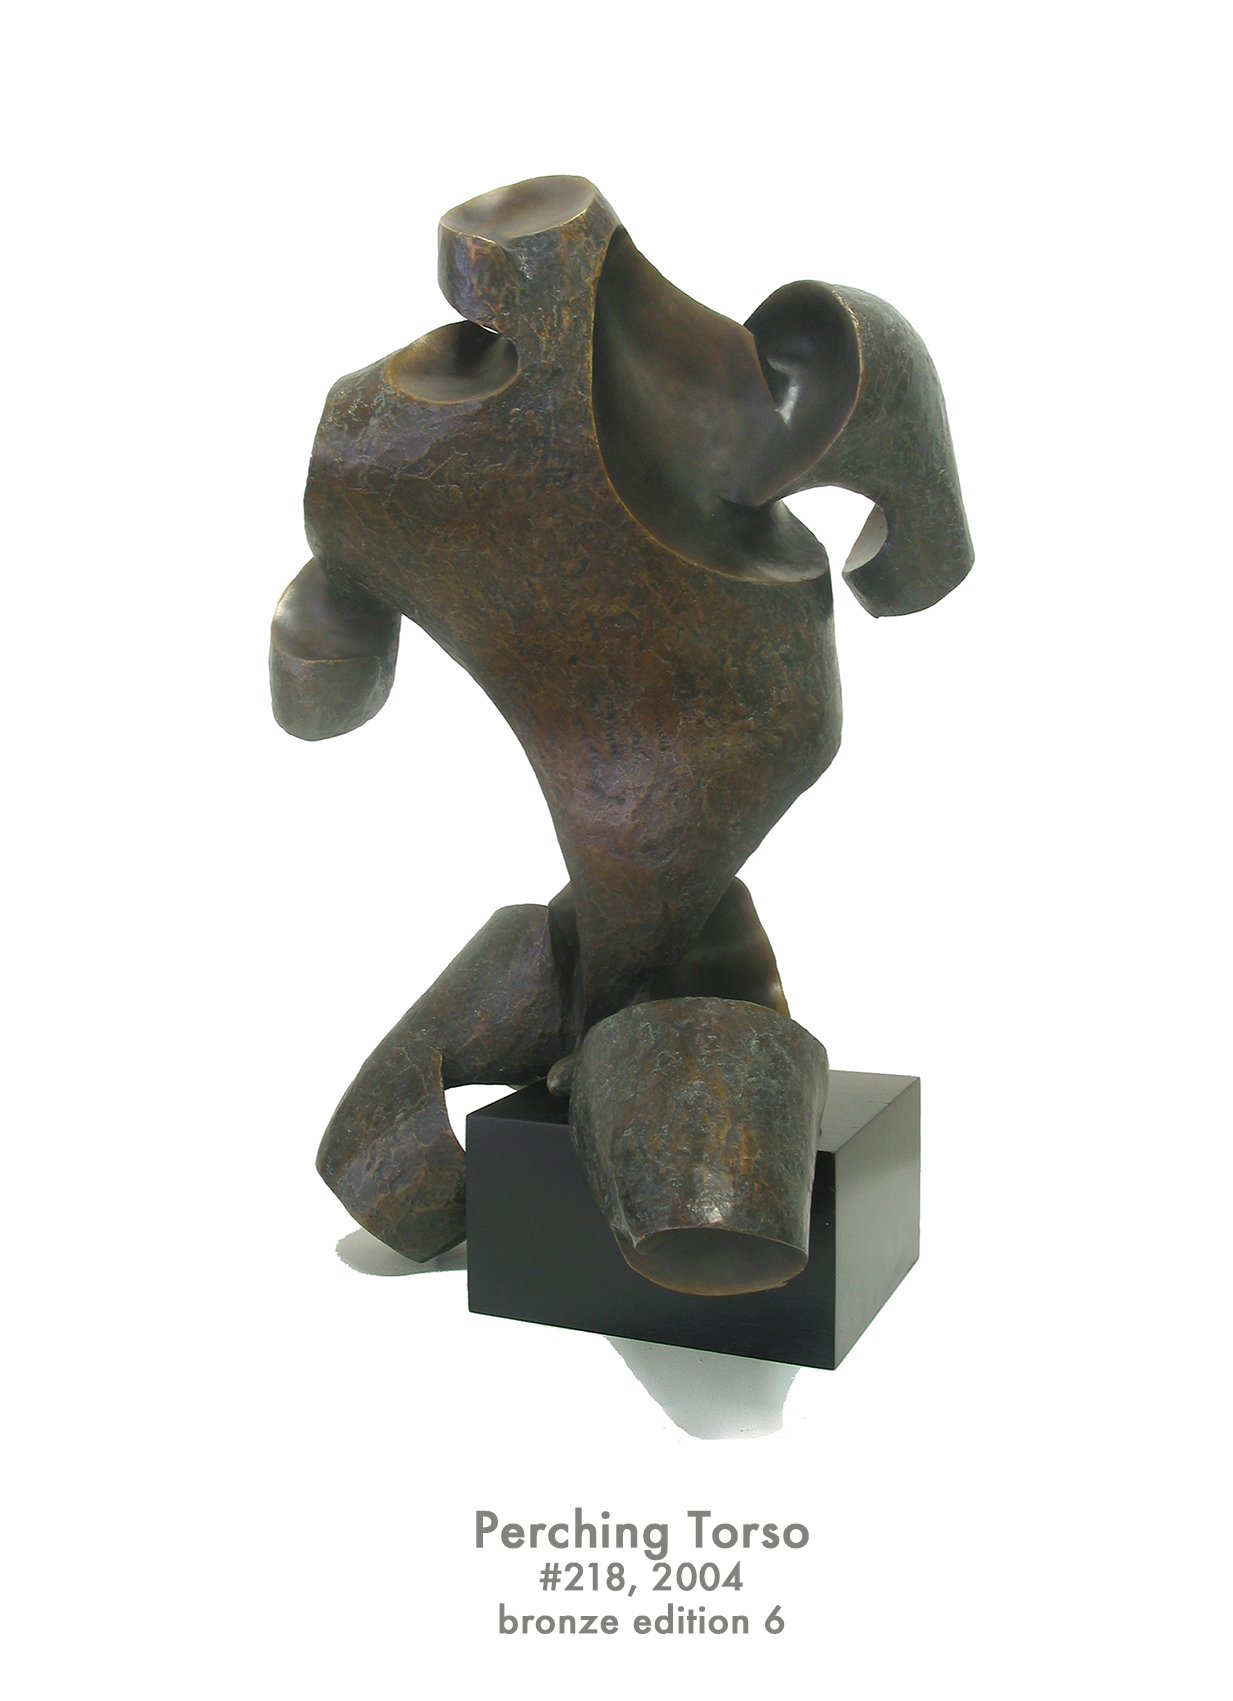 Perching Torso, 2014, bronze, #218